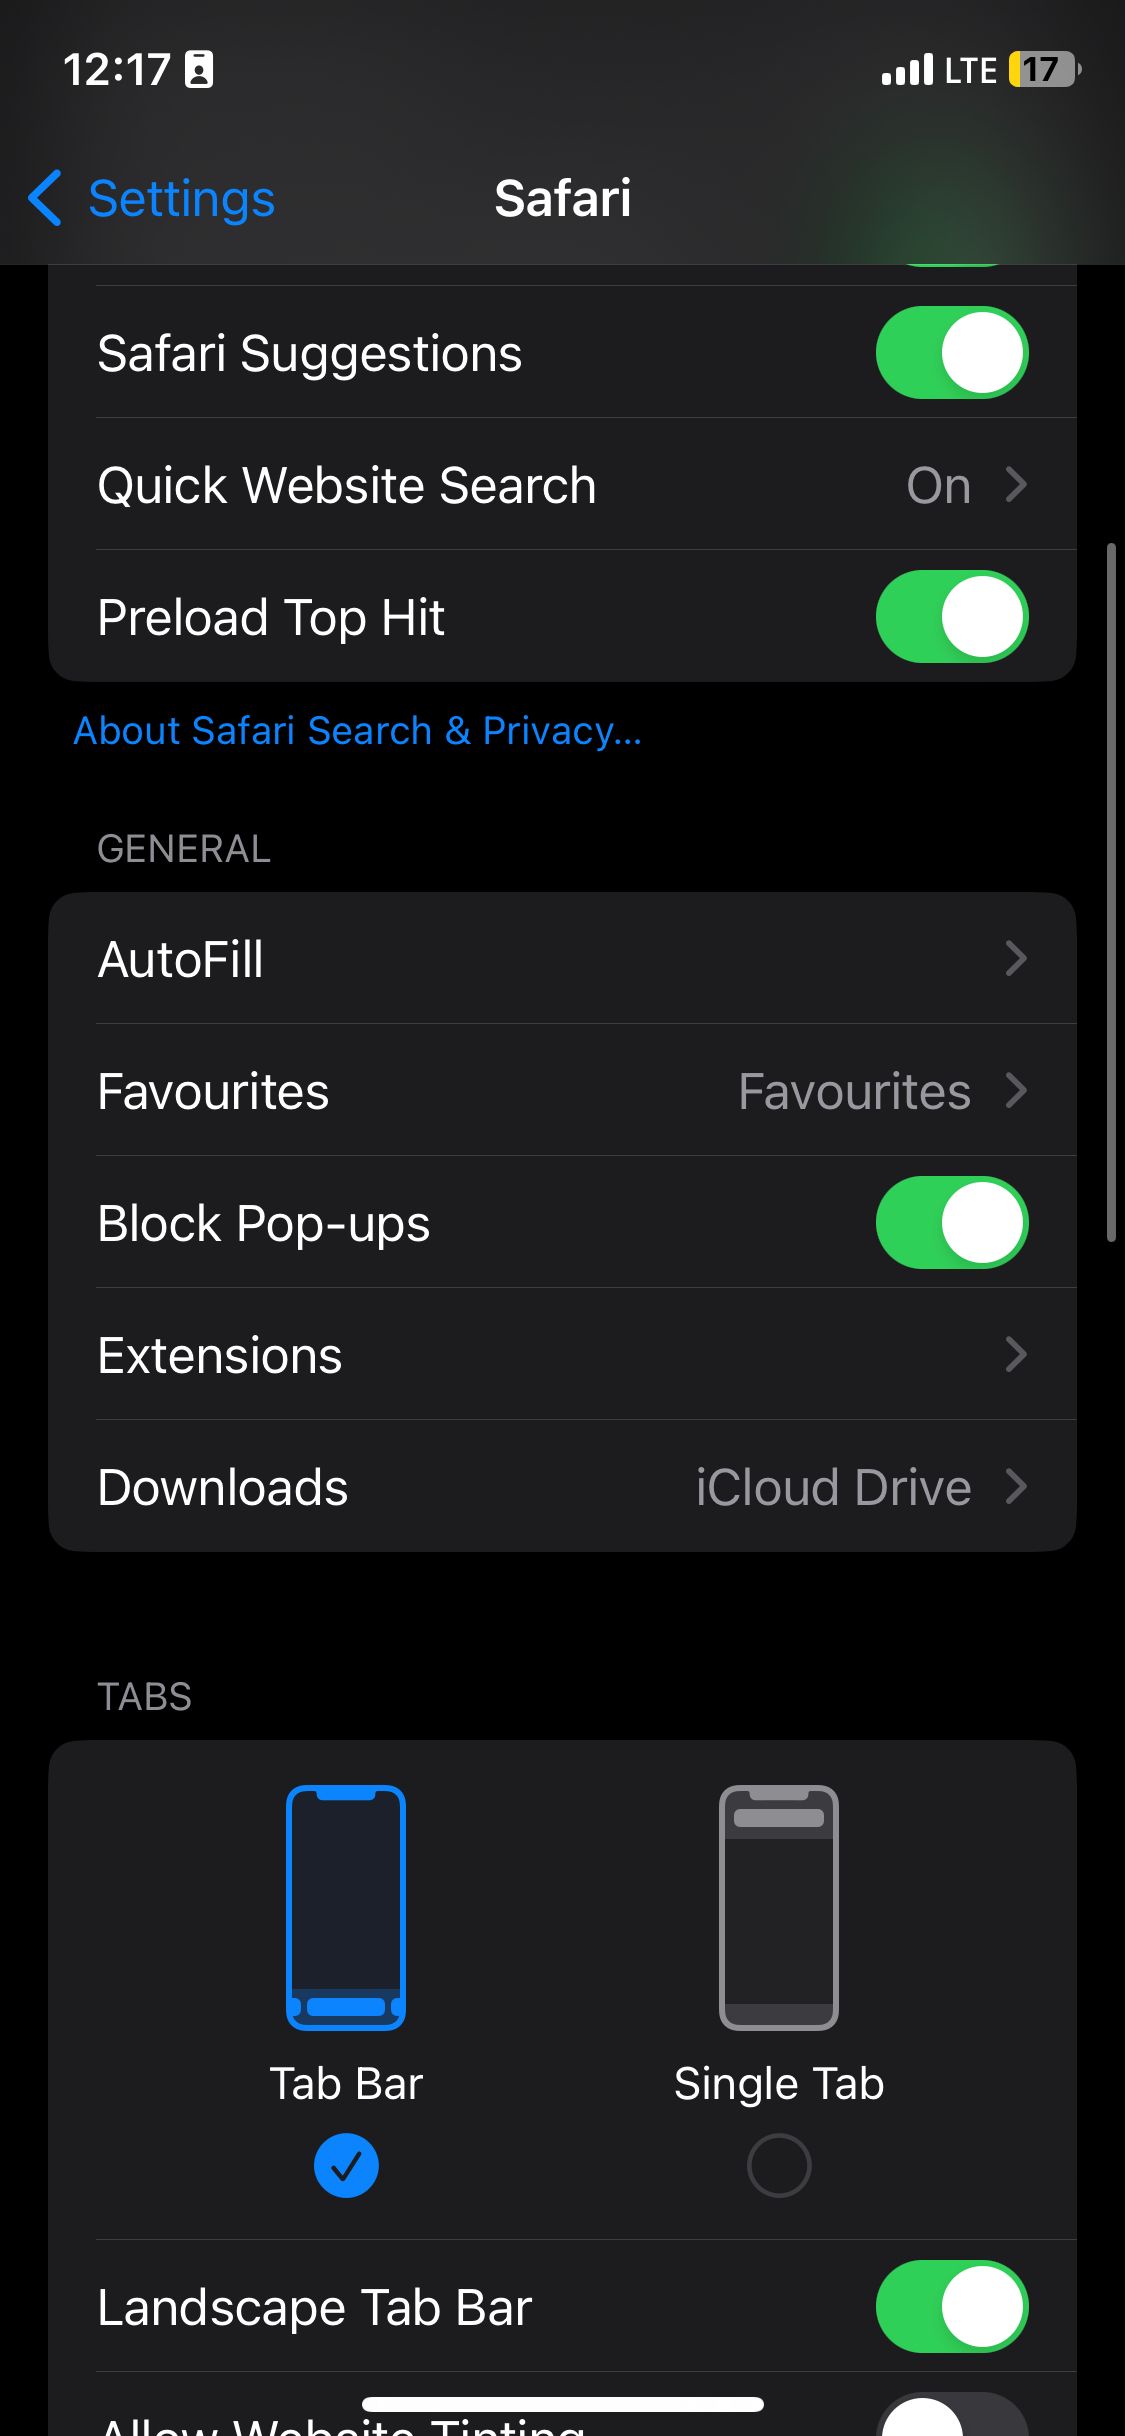 Safari settings with the Block Pop-ups toggle